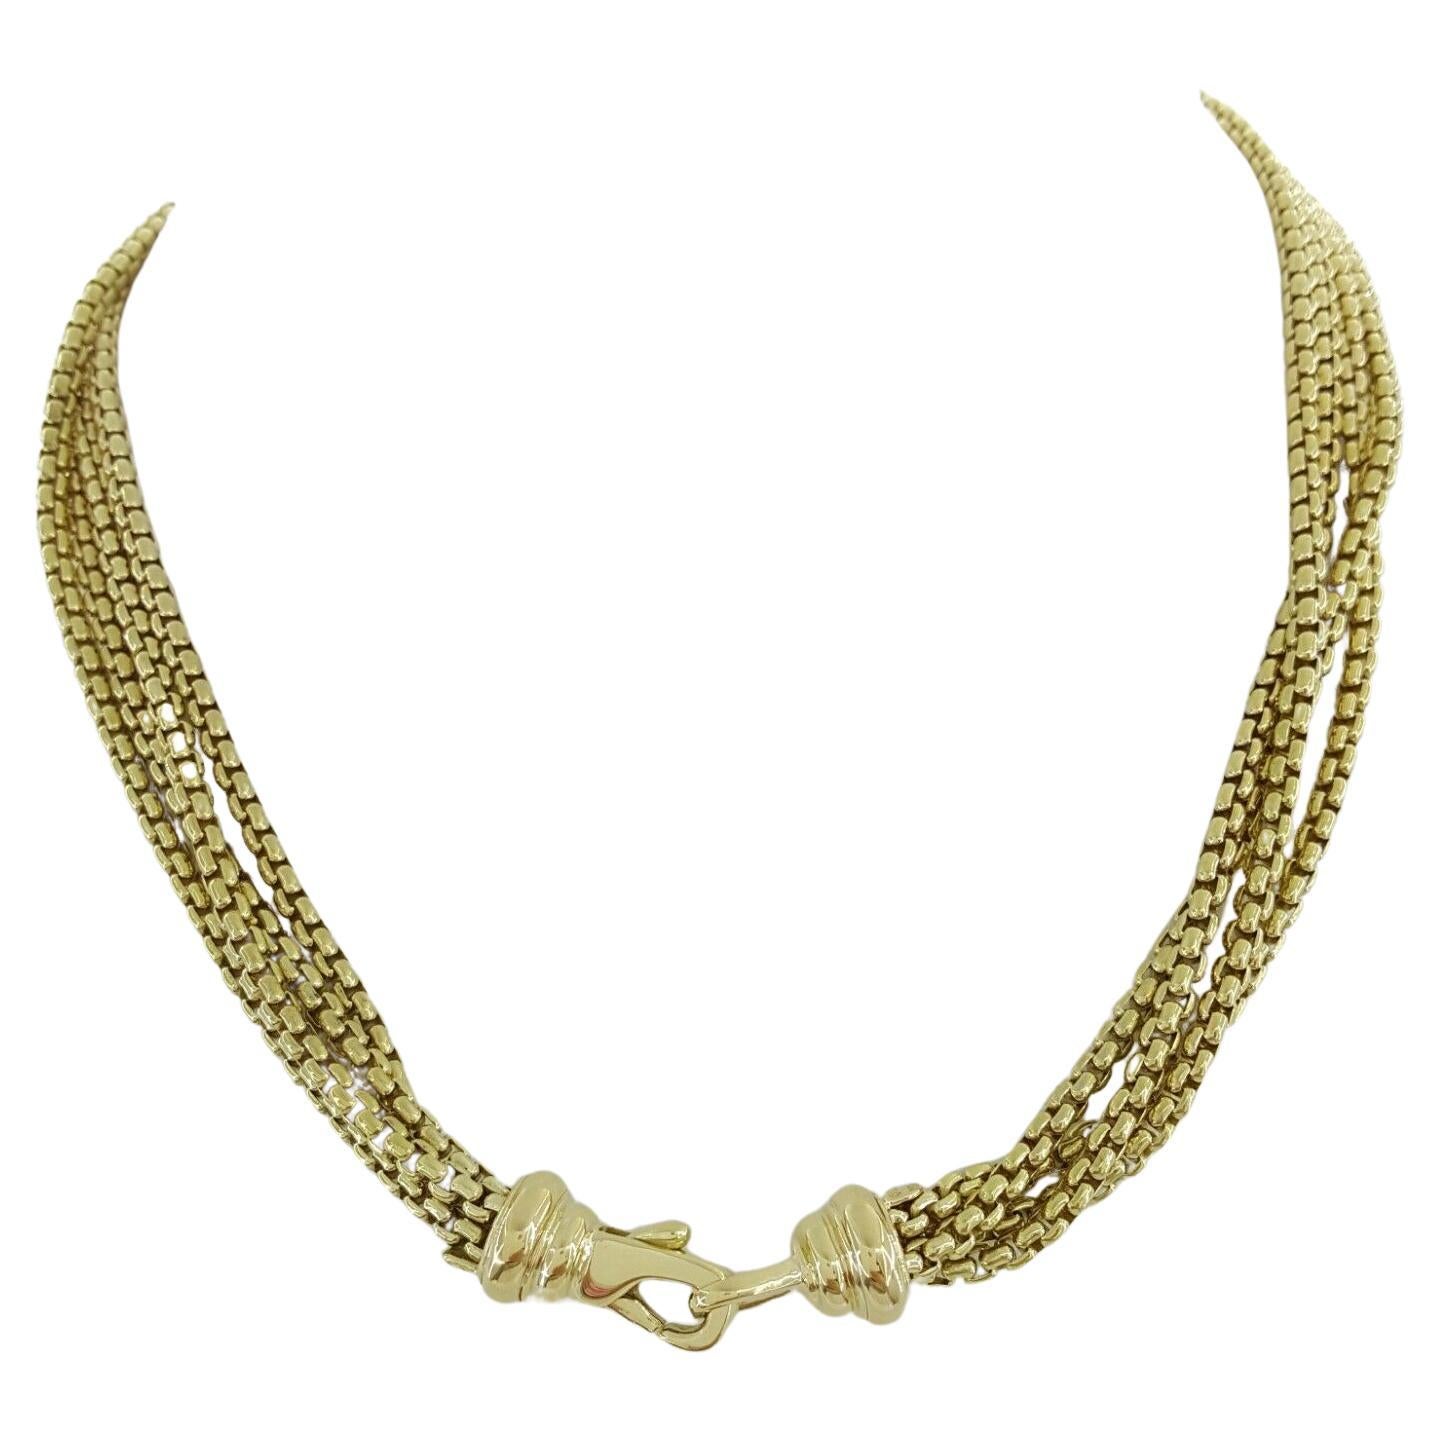  David Yurman 18k Yellow Gold Multi Cable Chain Necklace